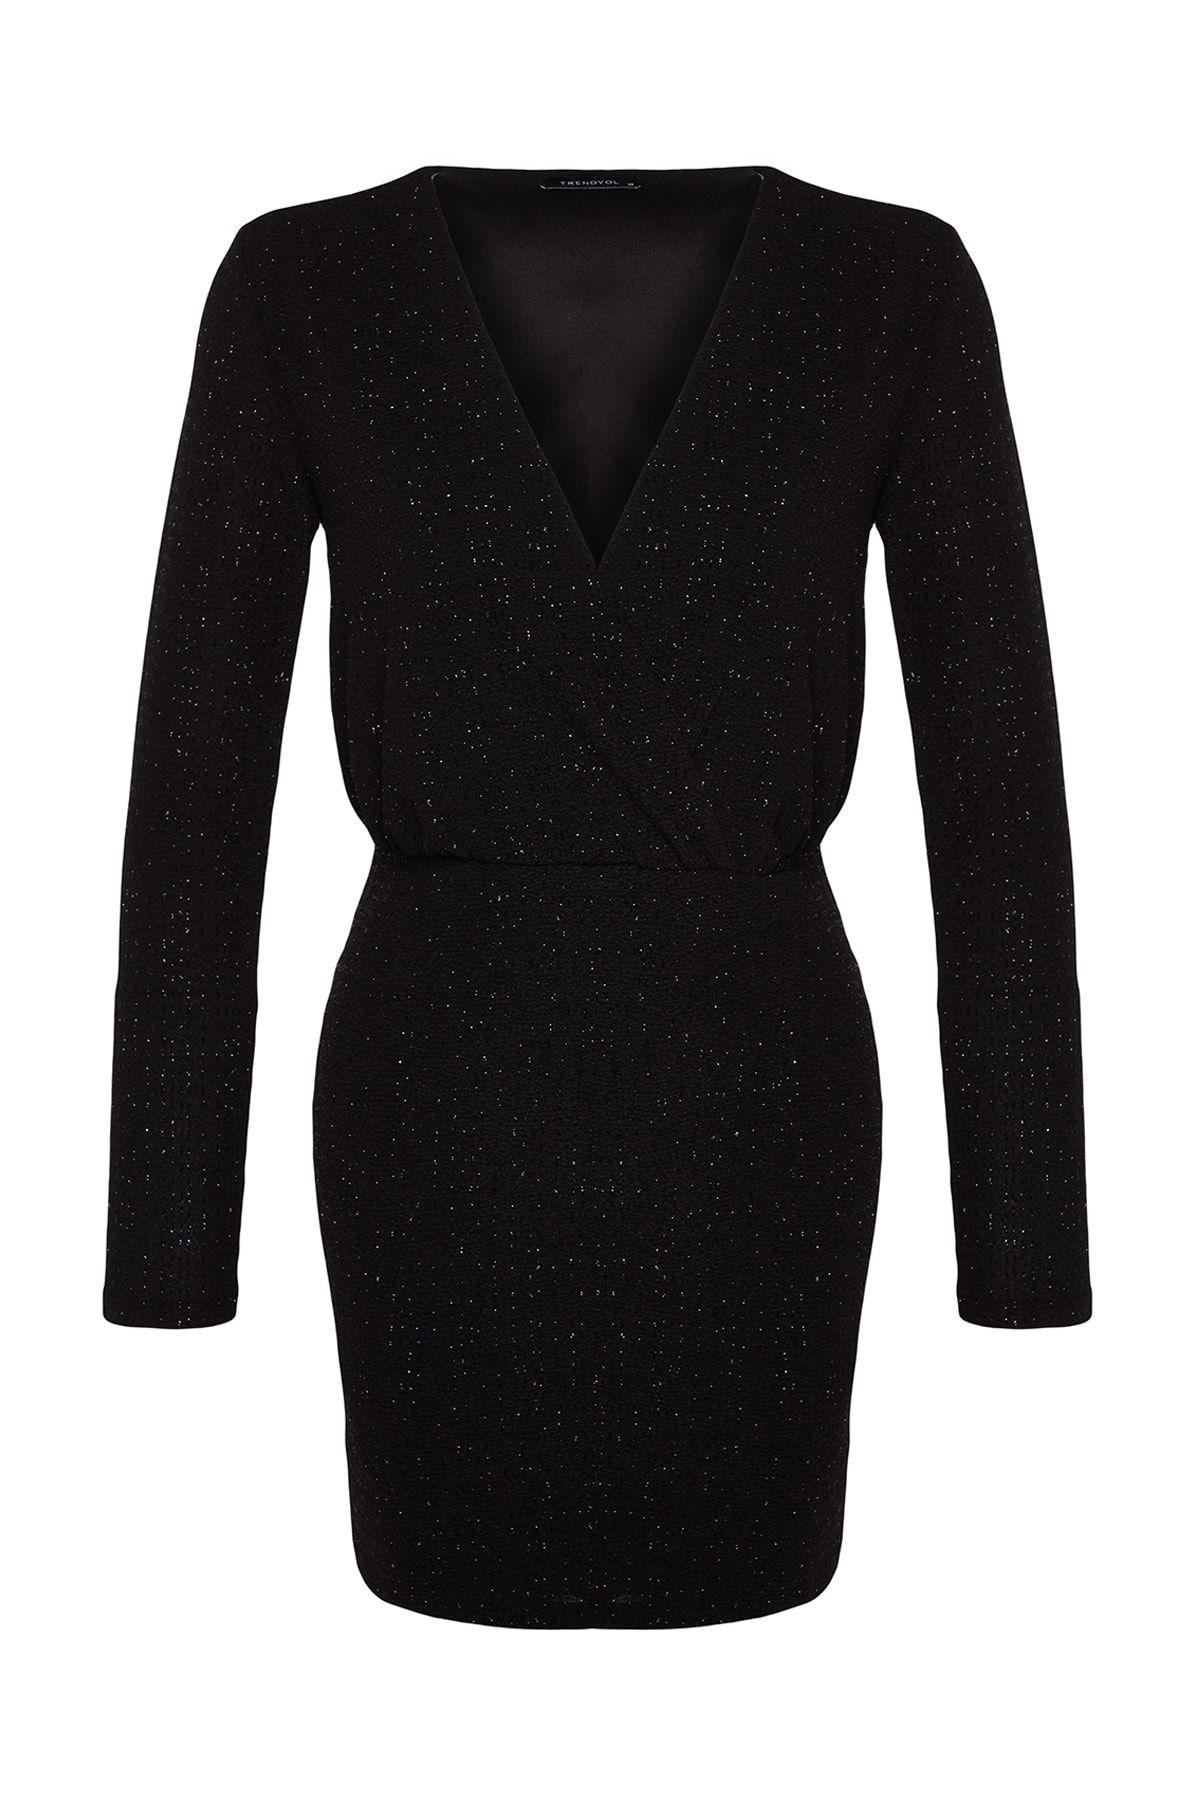 Buy Nelly Glitter Double Slit Dress - Black